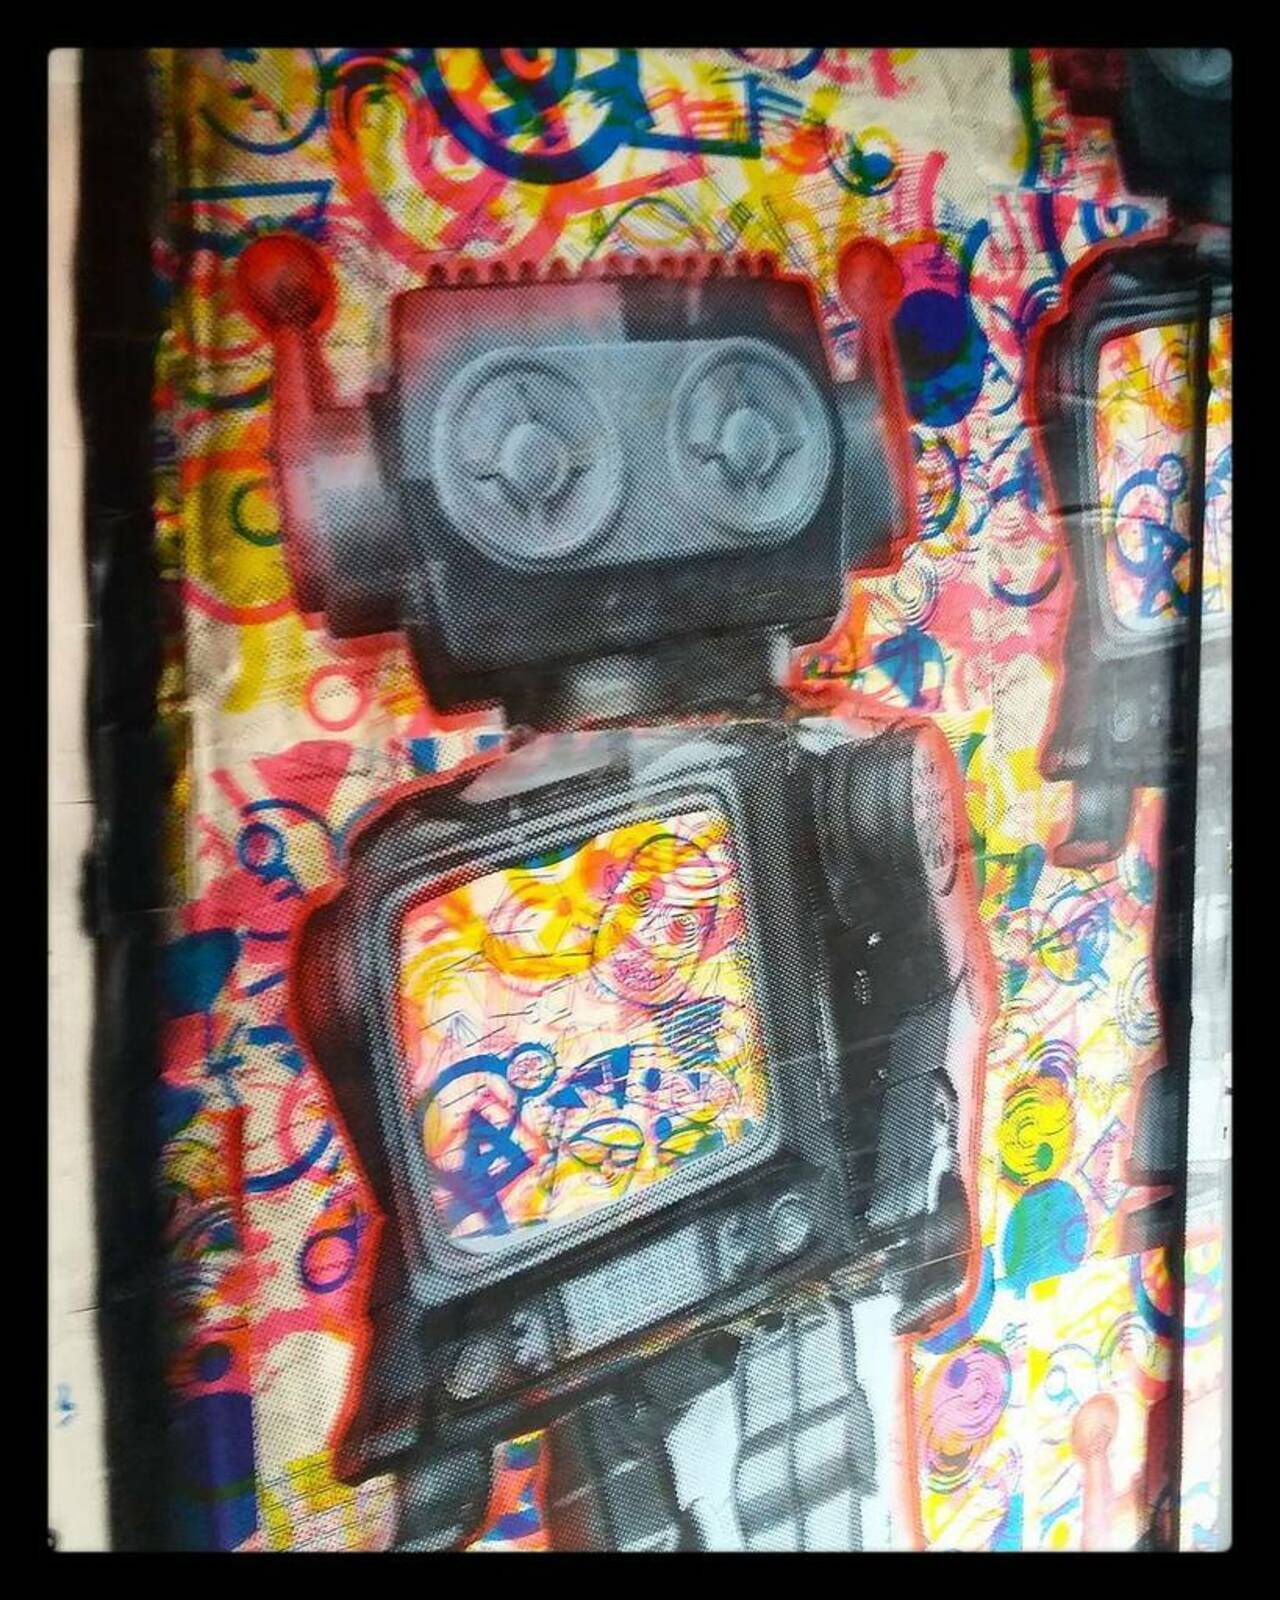 Robot. 
#robot #screen #oldshipinn #streetart #graffiti #art #streetartiseverywhere #spraypaint #sprayart #london #… http://t.co/Sn9M1wFJ4s